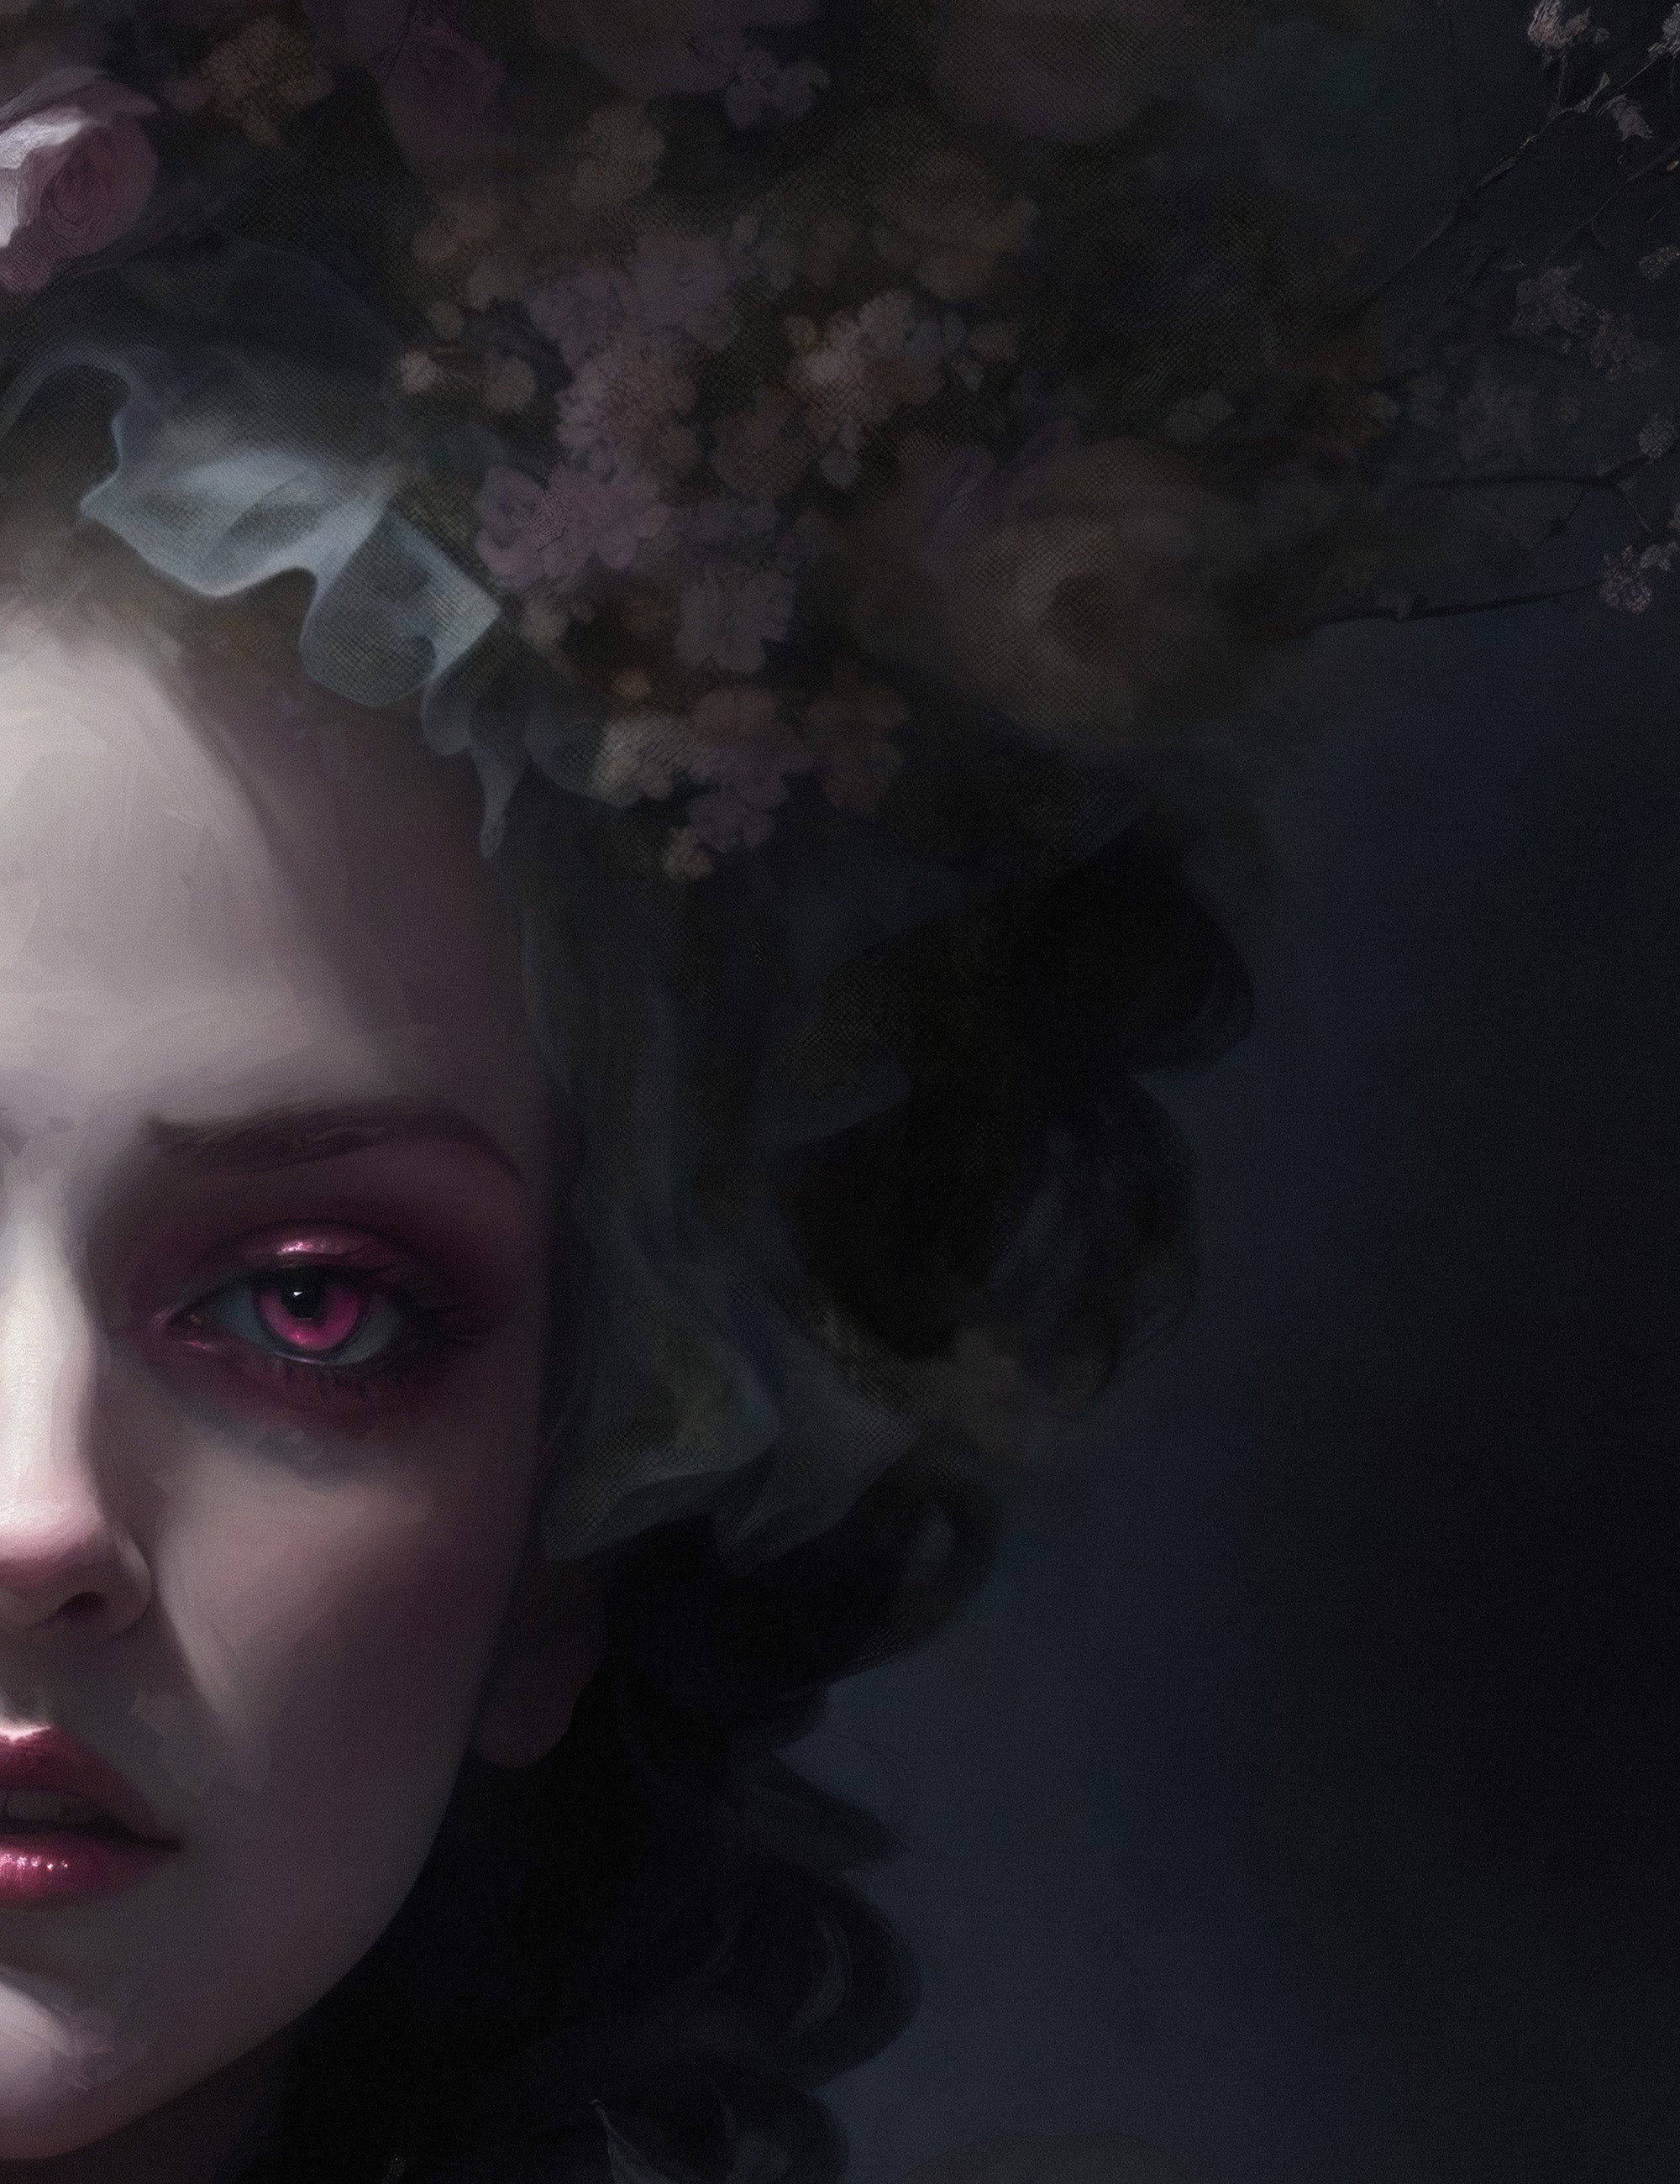 Vampire's Daughter - Fine Art Giclee Print